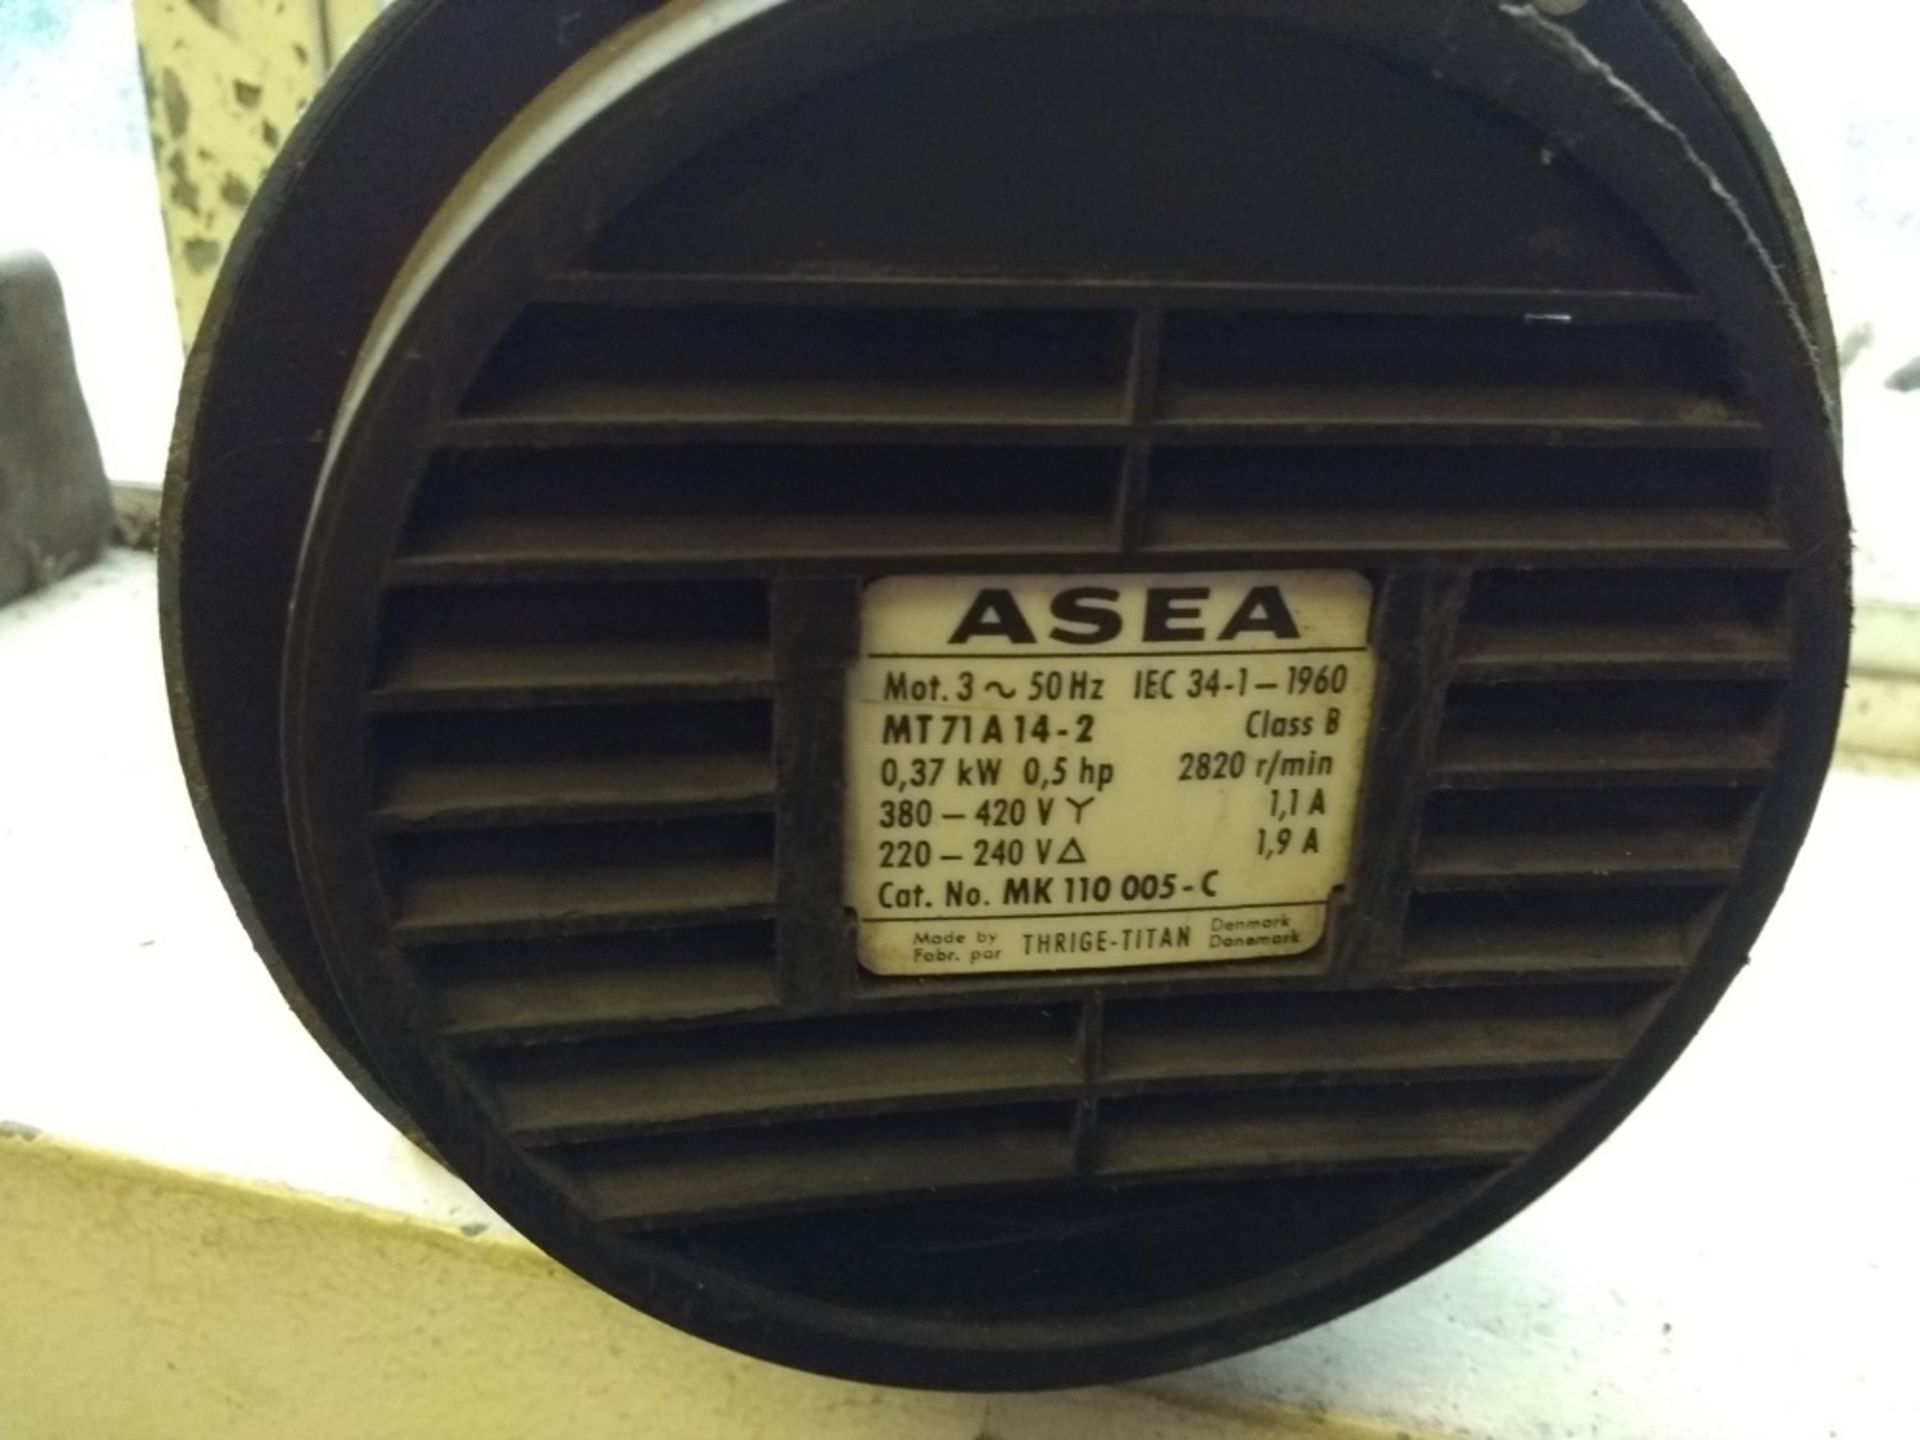 Asea MT71A14-2 Motor - Image 2 of 2